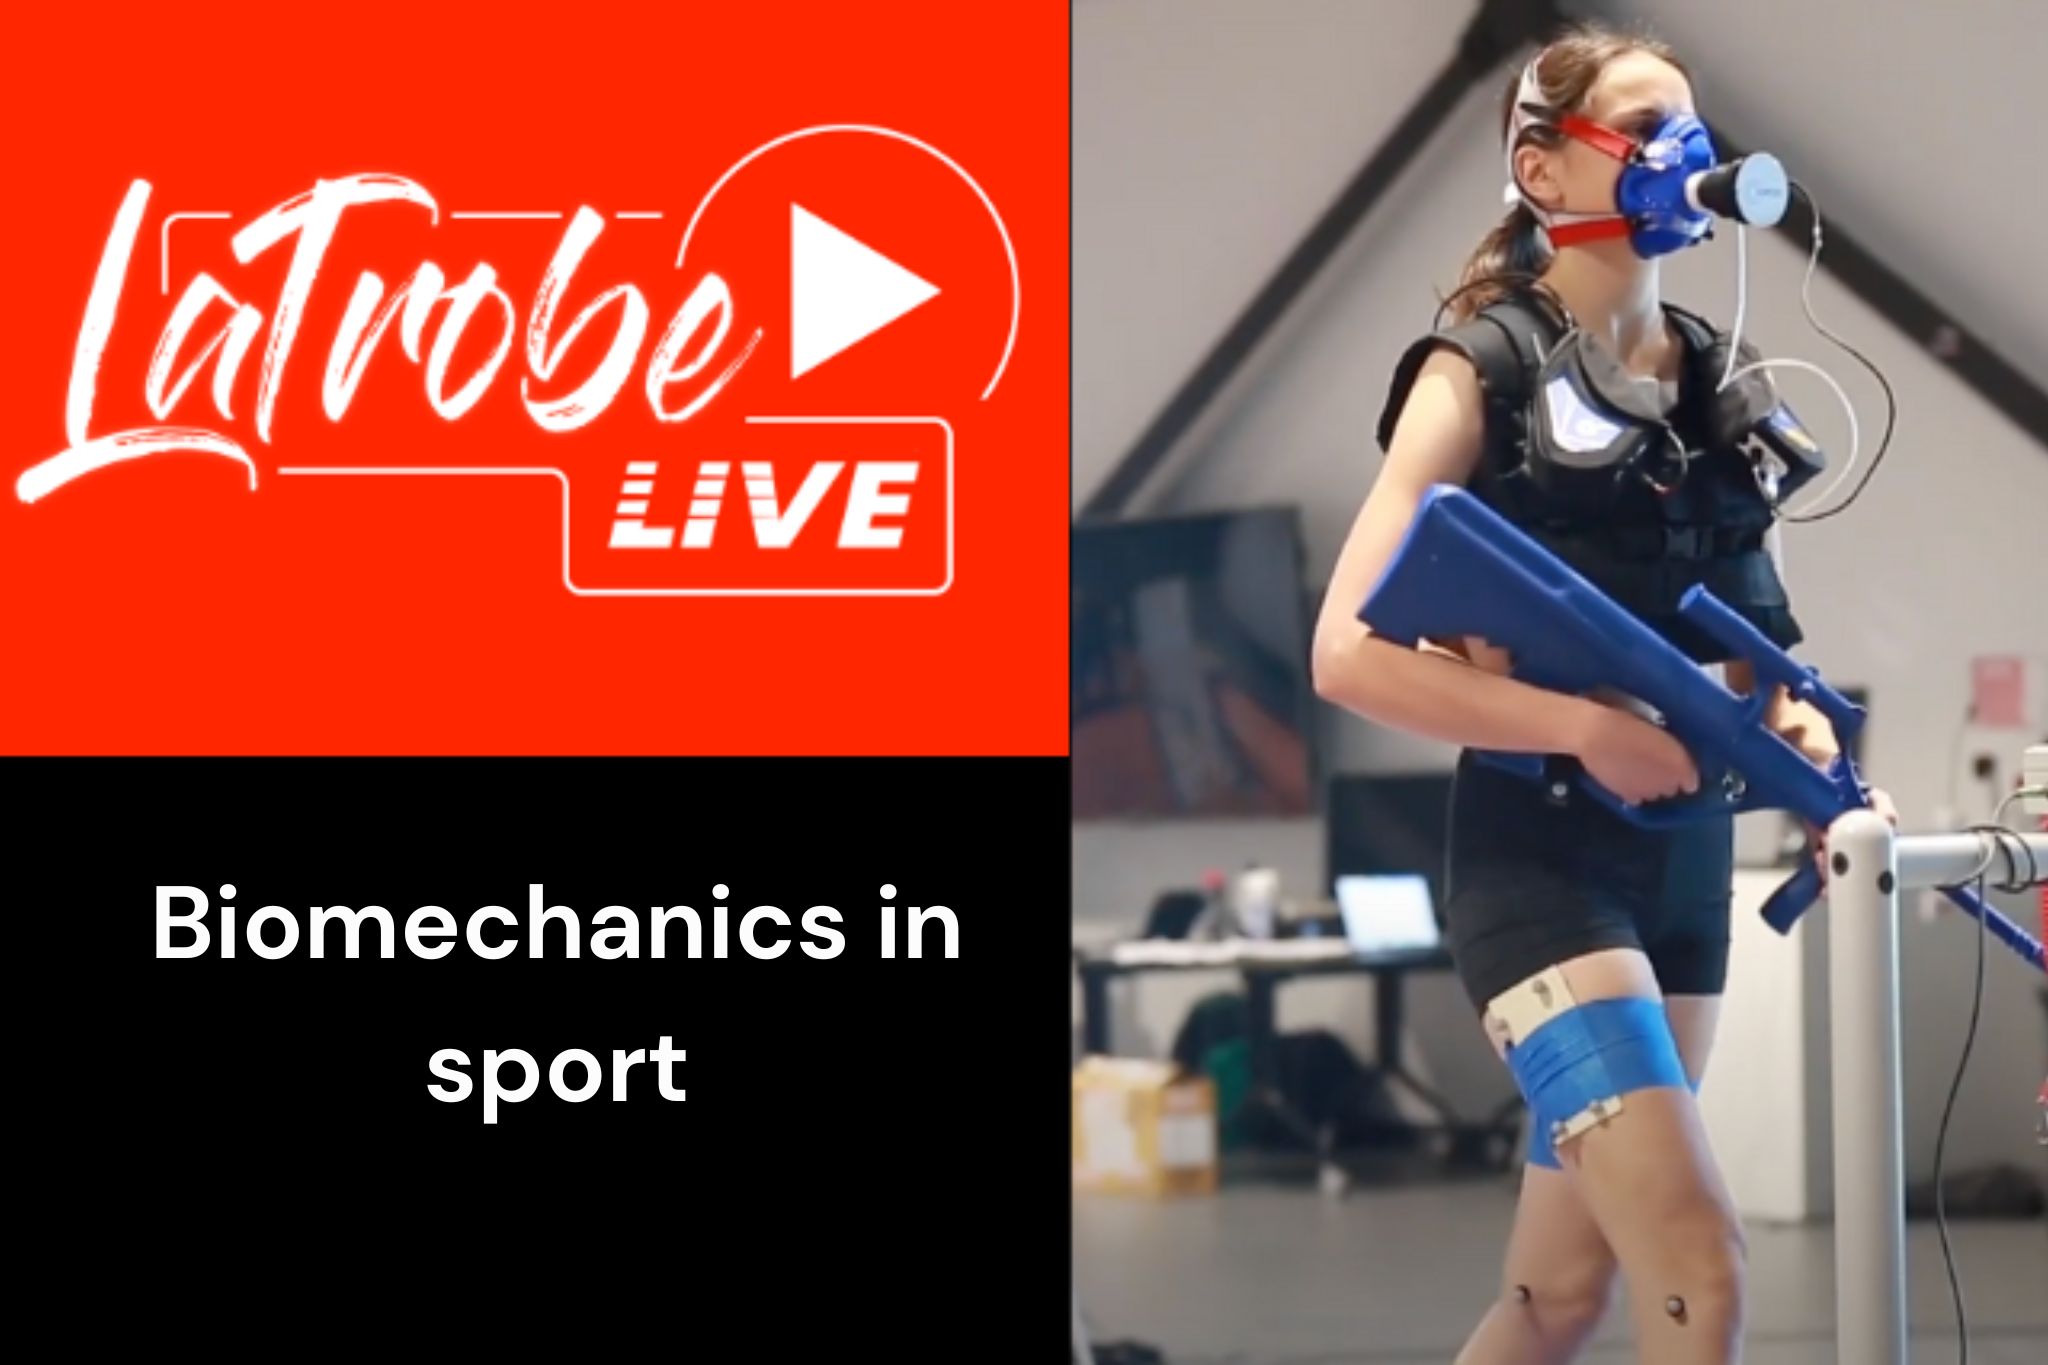 The La Trobe biomechanics lab is using sports to further..